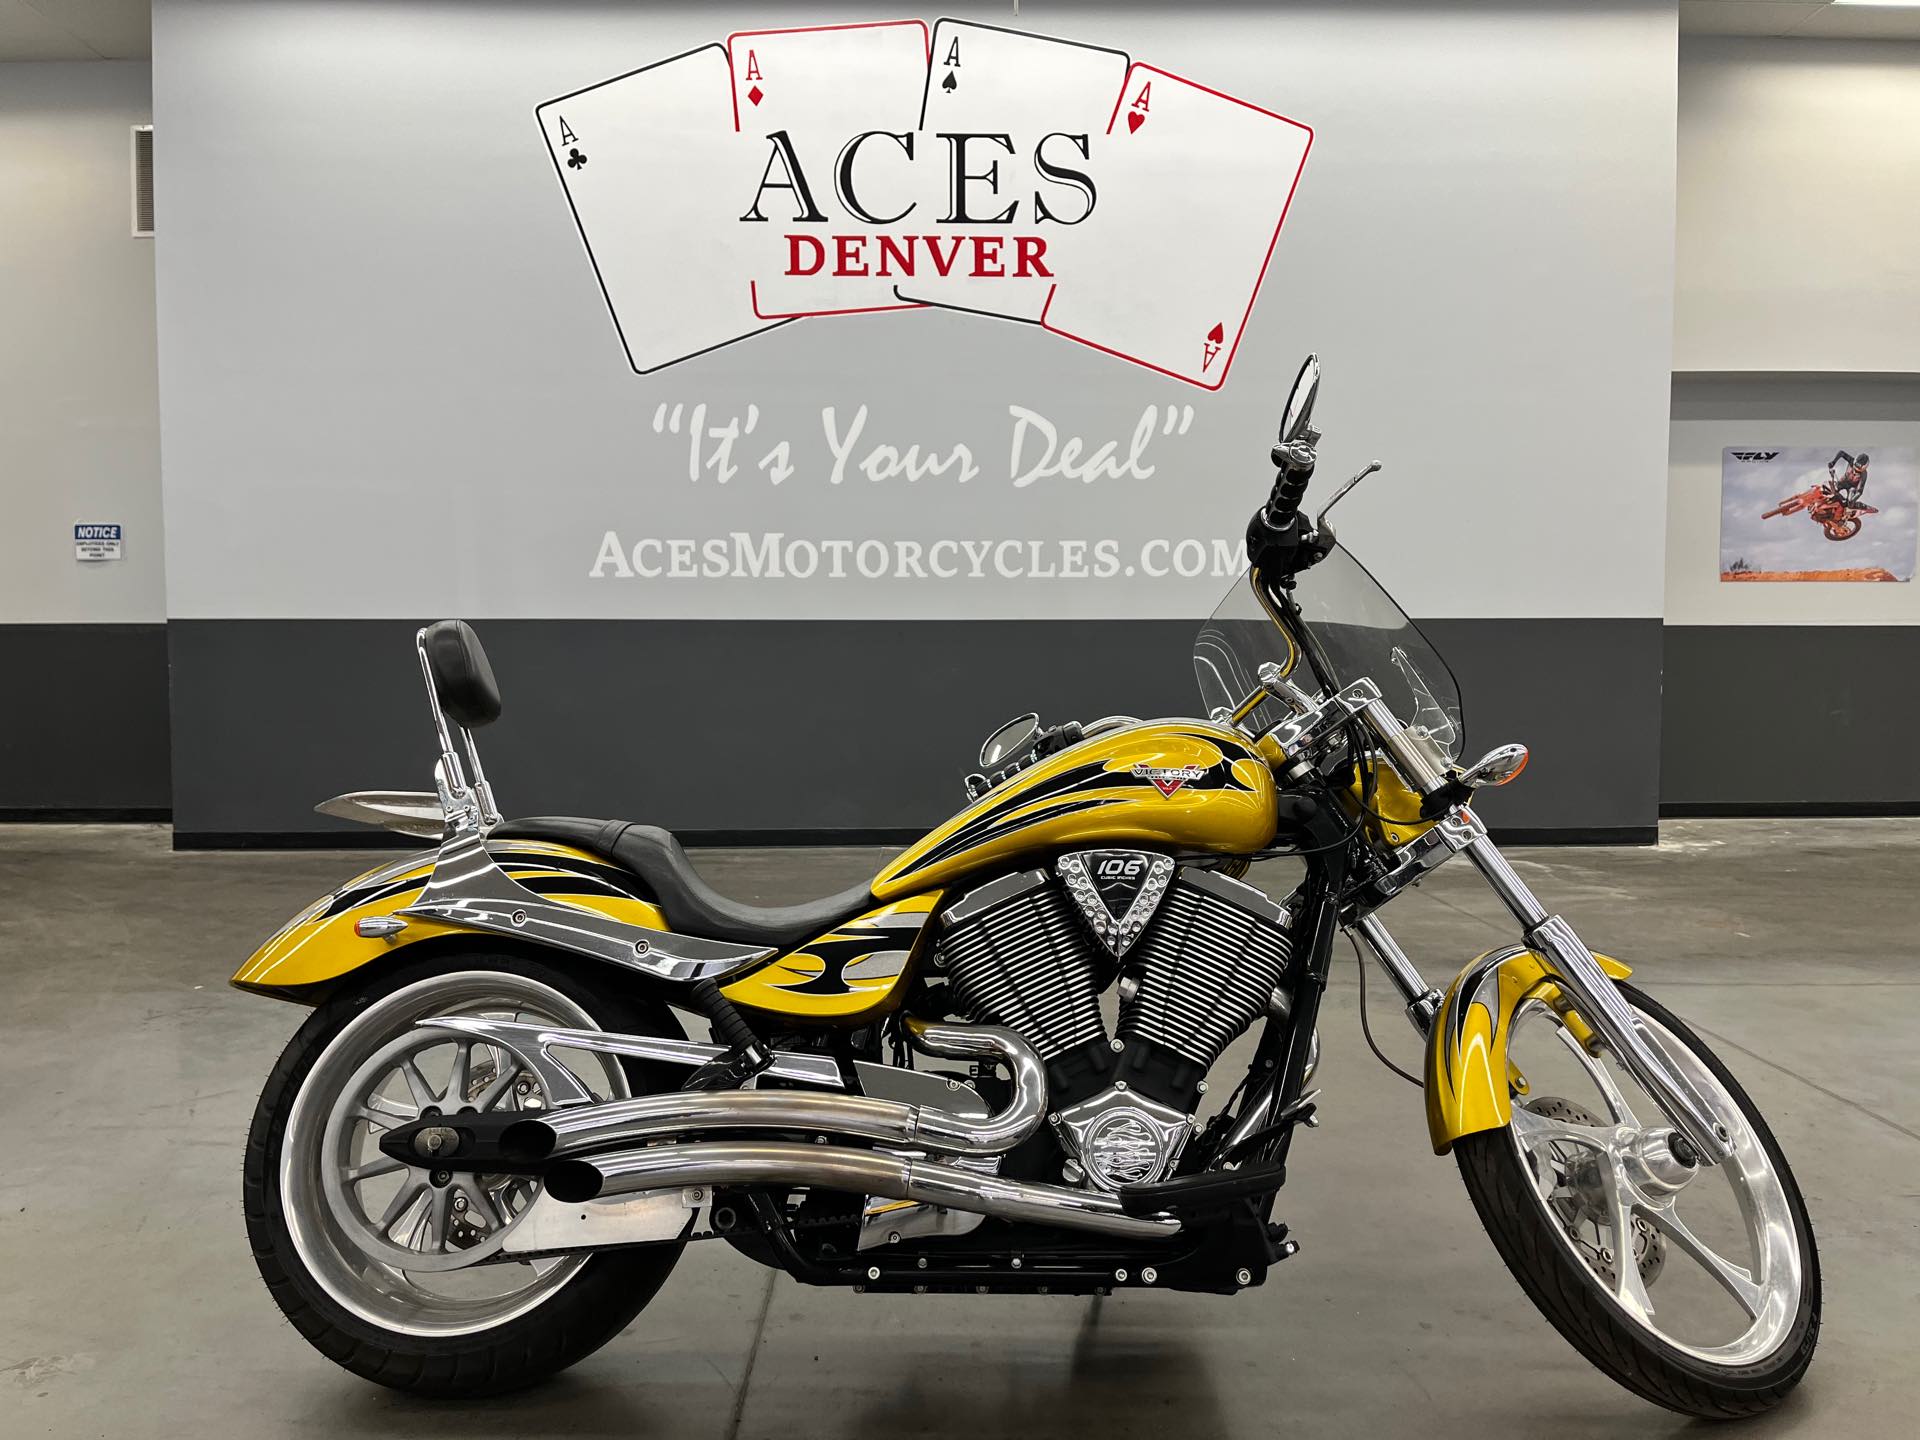 2010 Victory Jackpot Base at Aces Motorcycles - Denver